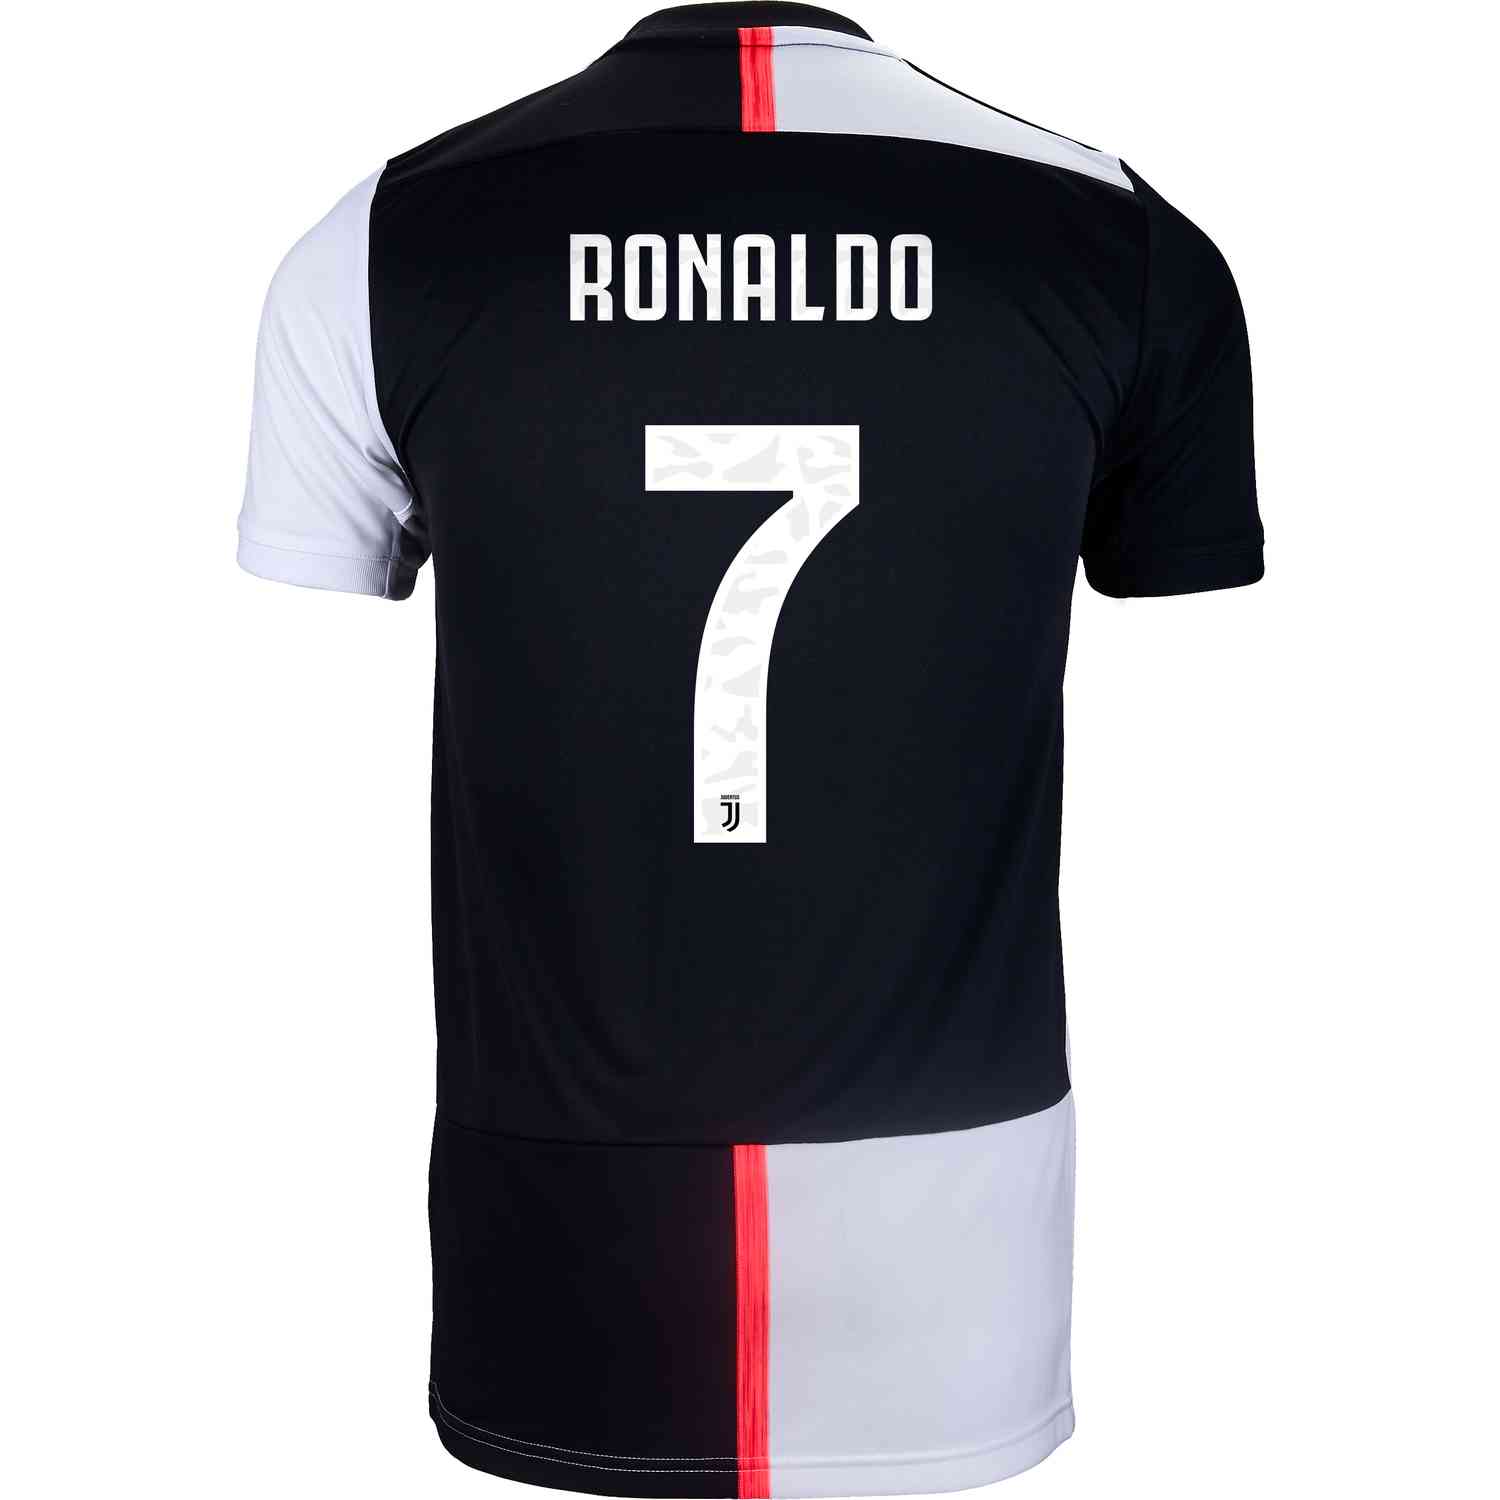 Cristiano Ronaldo Kit Number - Image to u